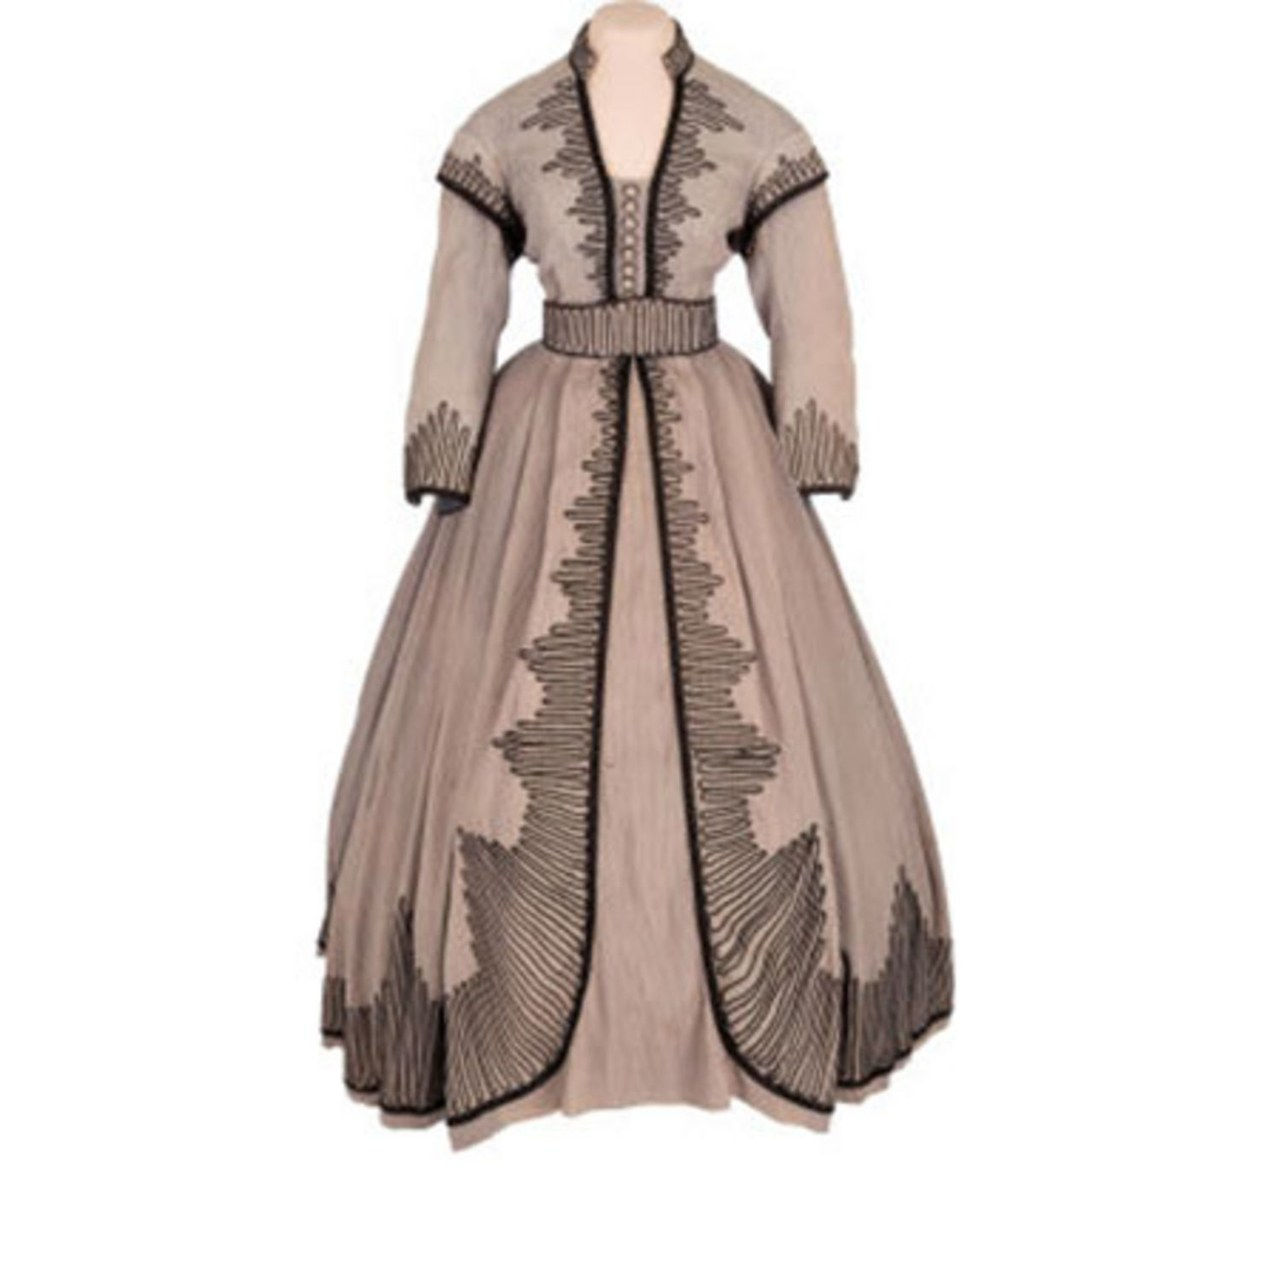 Scarlett ohara dress auction